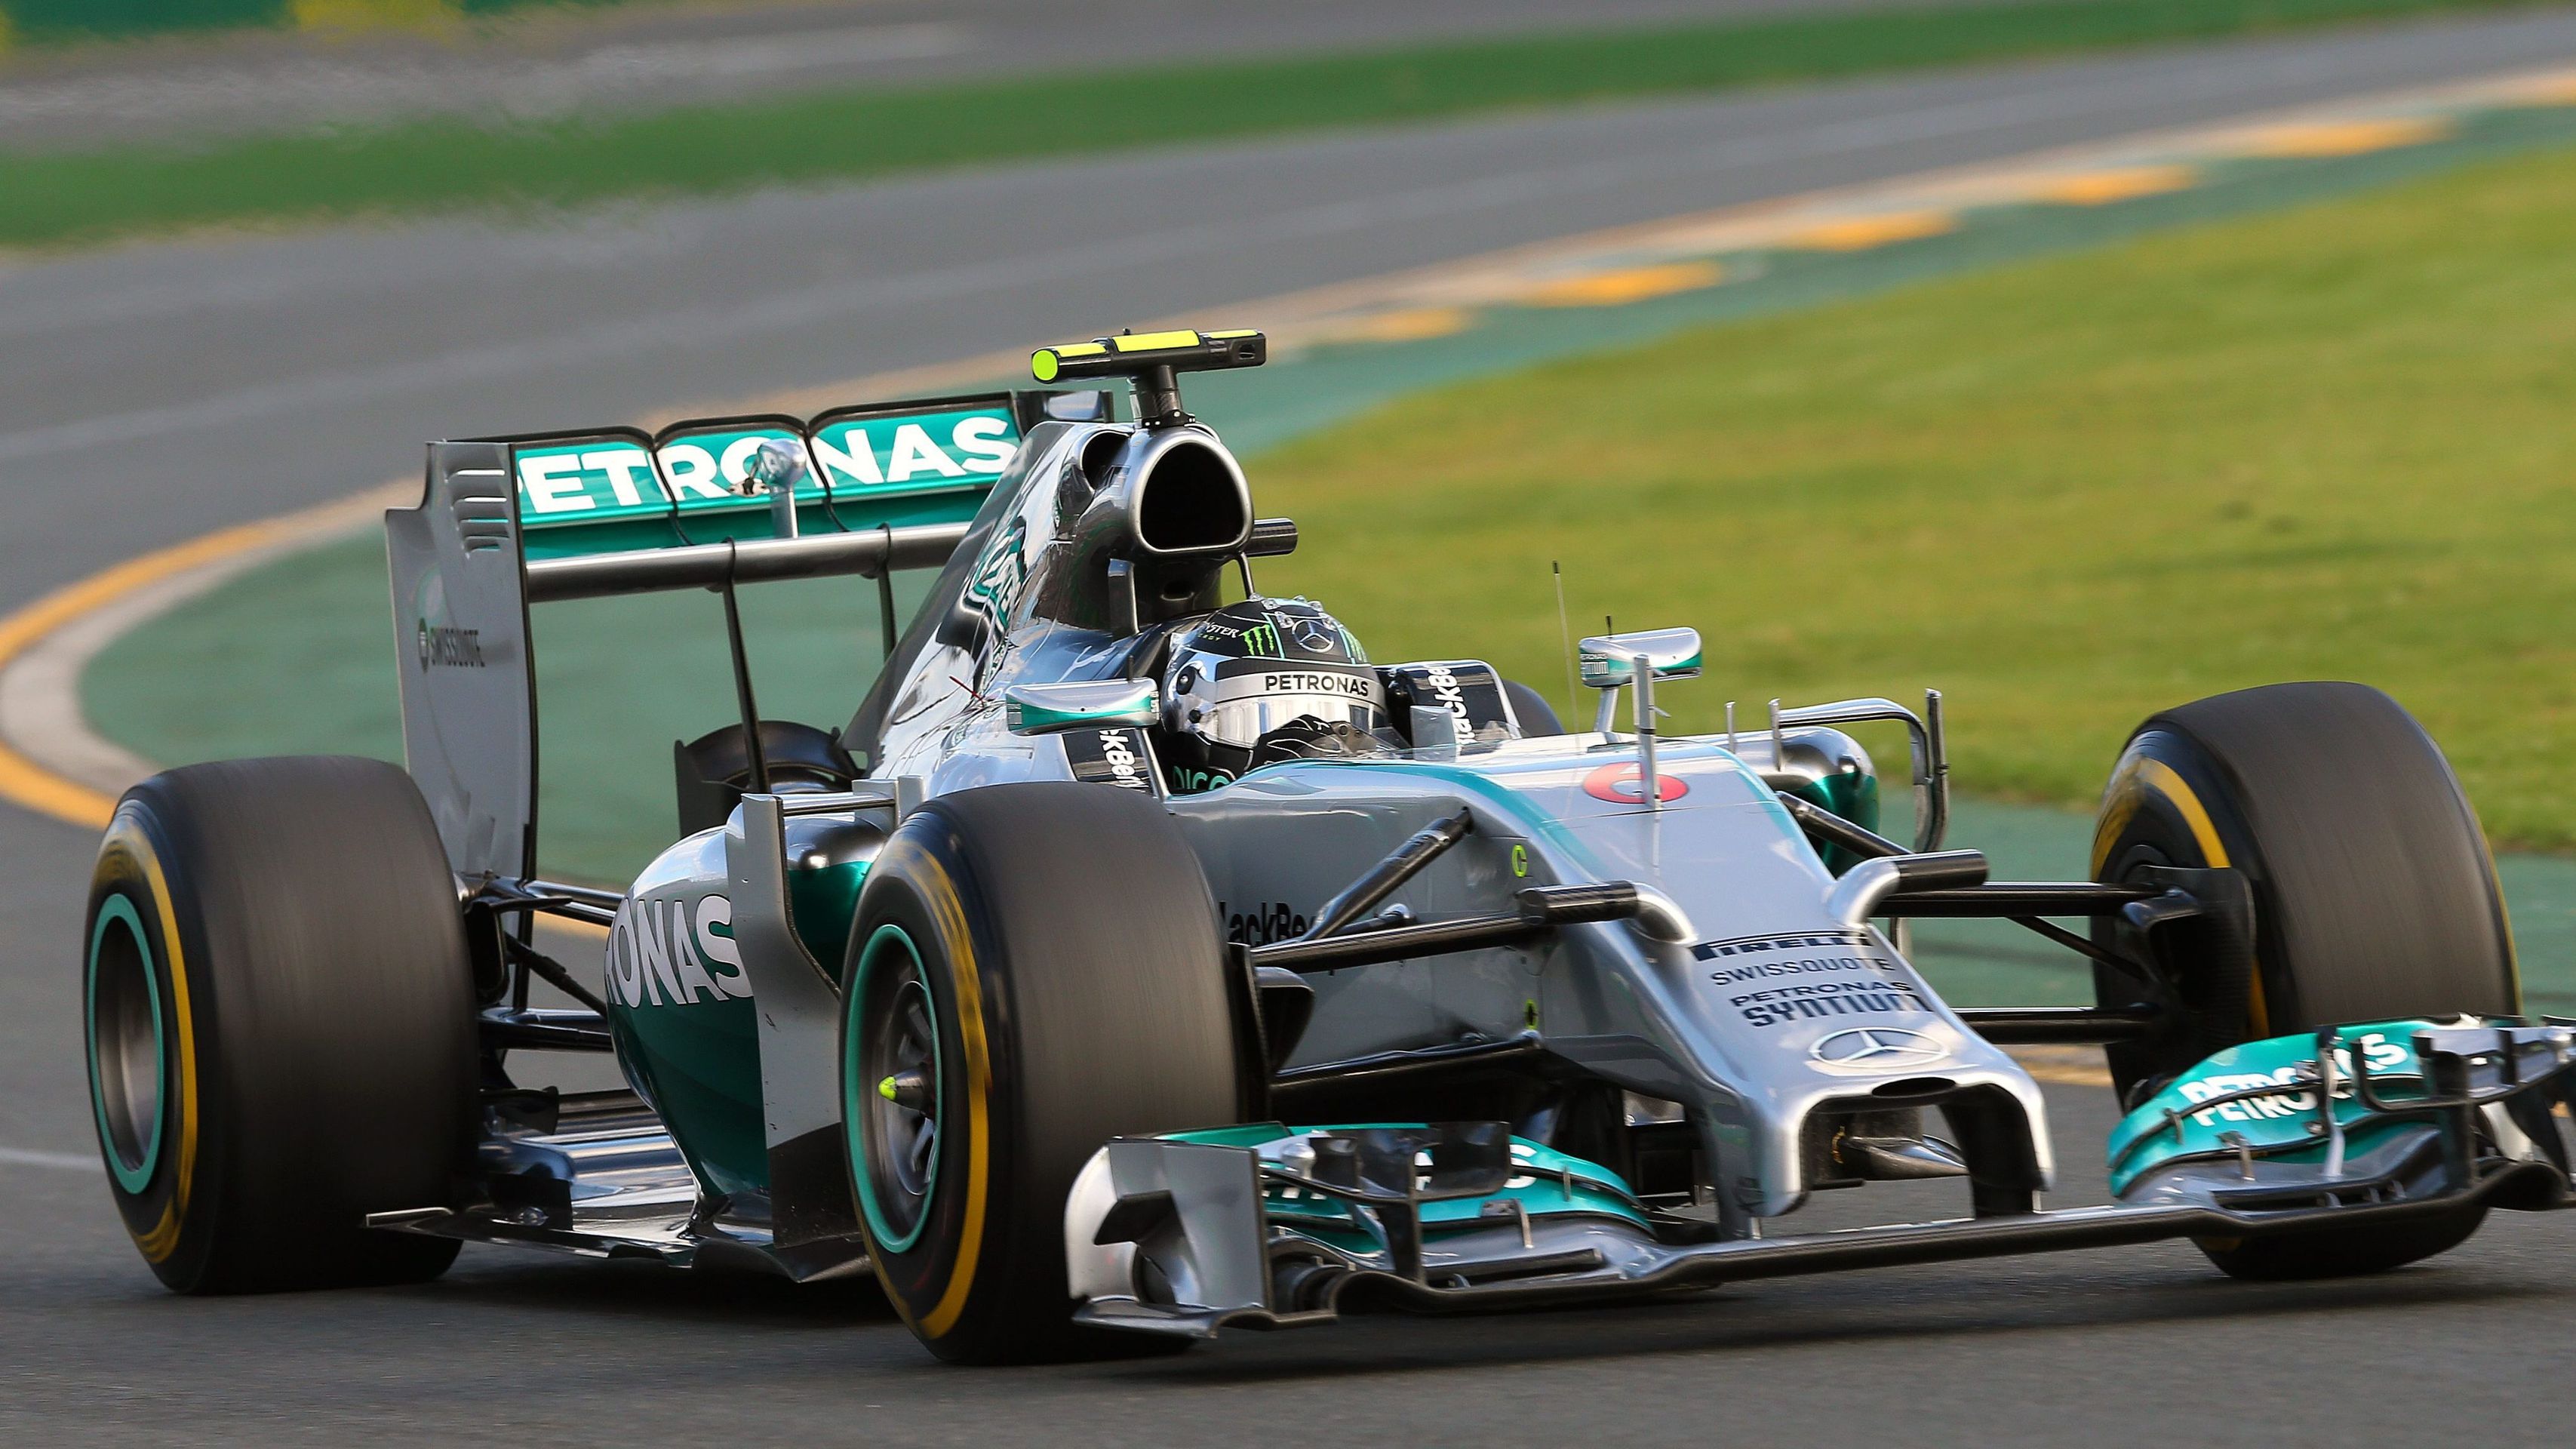 Velká cena Austrálie, Rosberg, Ricciardo, Magnussen - 10 - GALERIE: Rosberg ovládl Velkou cenu Austrálie, domácí Ricciardo byl druhý (3/10)